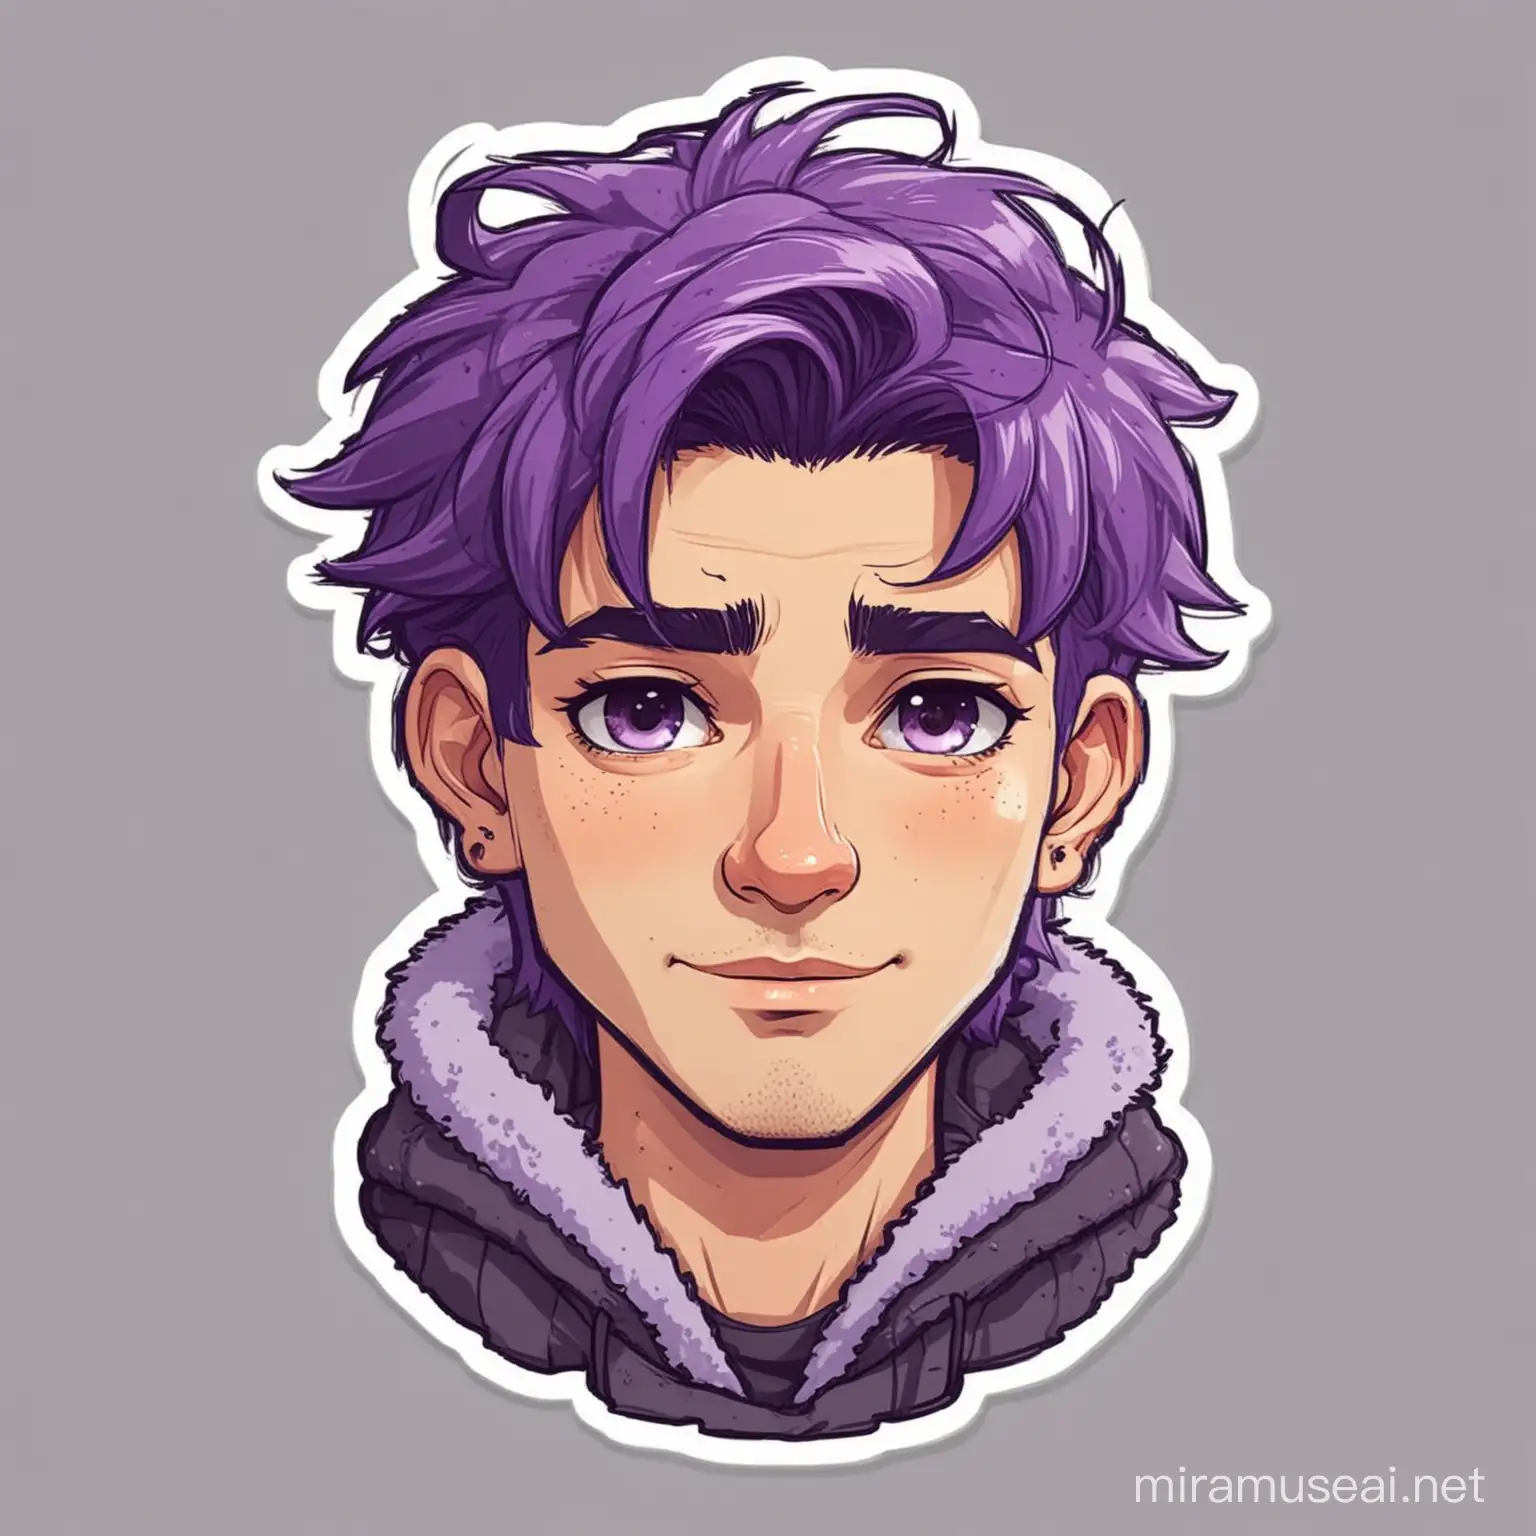 cozy man, cartoon sticker style, high level detail, purple colored hair